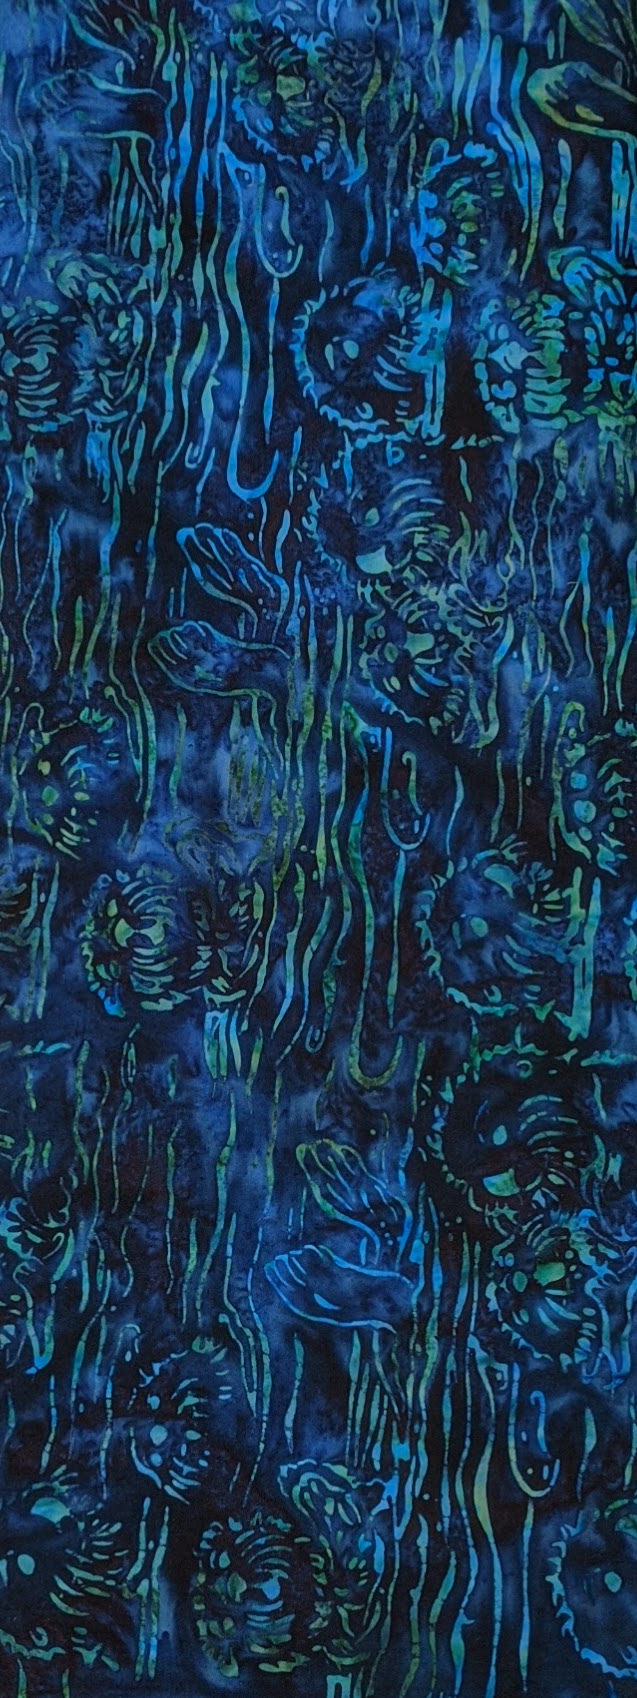 Hoffman Fabrics Lapis Blue Otter Batik Fabric H2281-123-Lapis